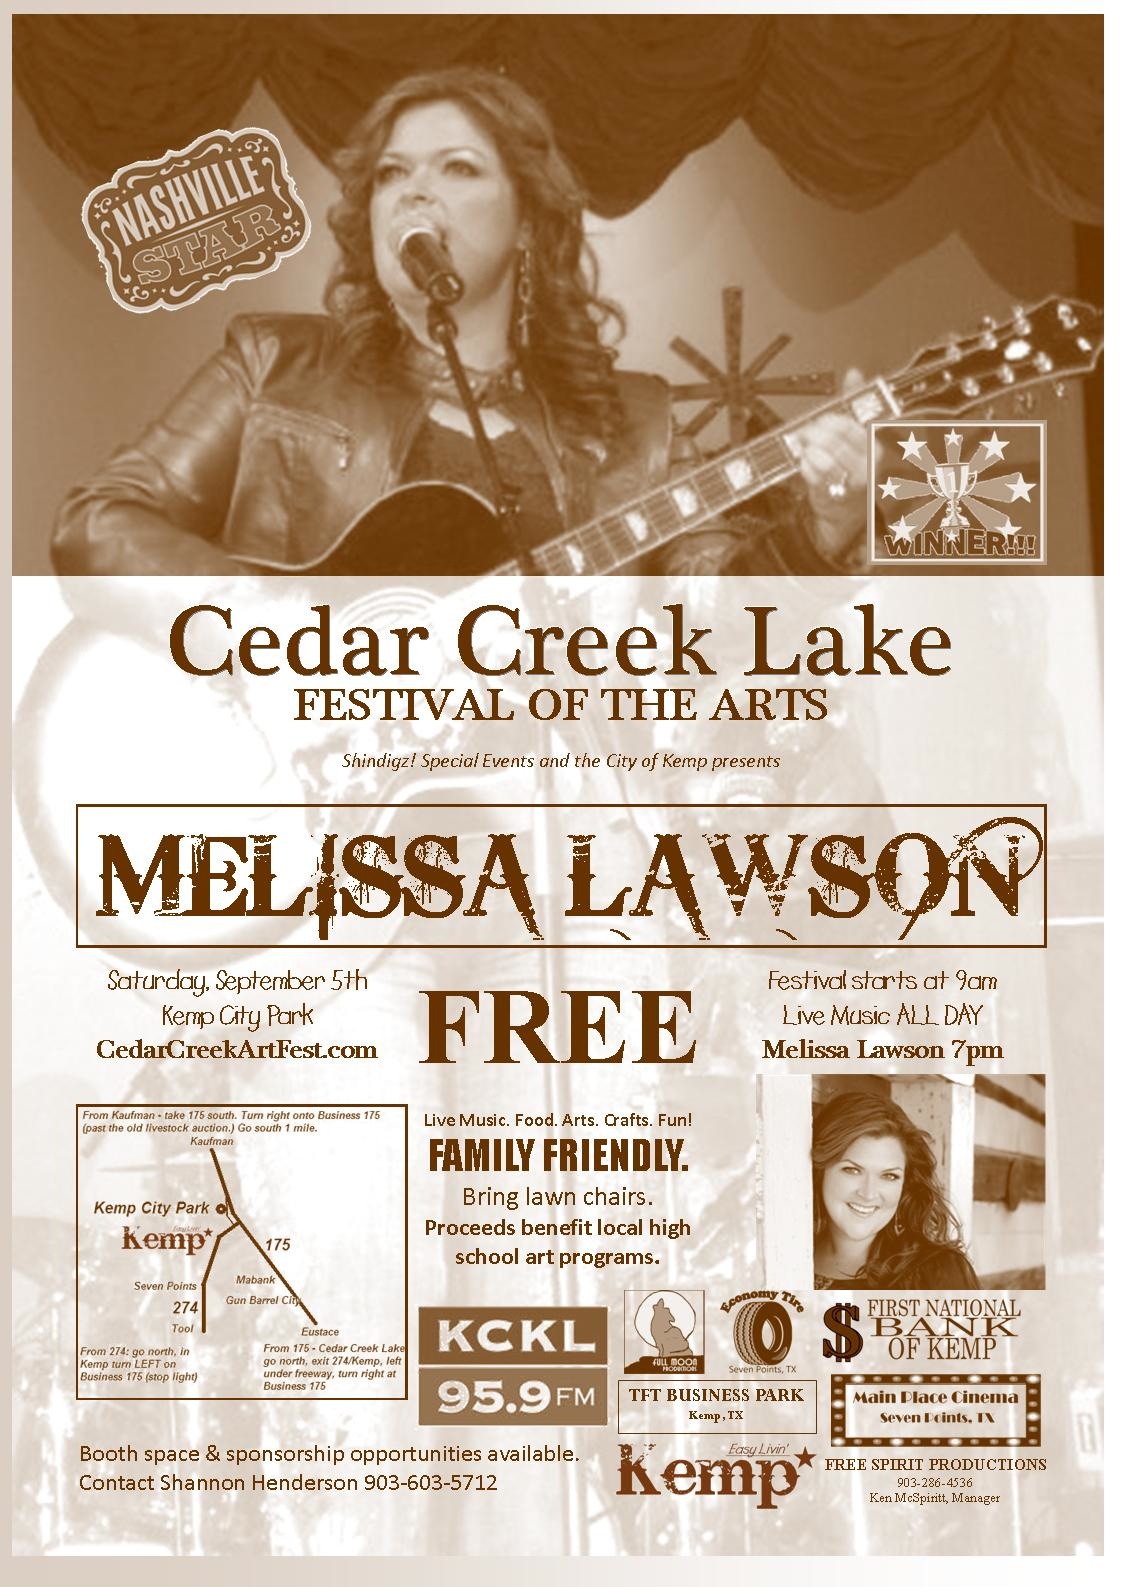 Cedar Creek Lake Festival of the Arts (Fall ‘09)